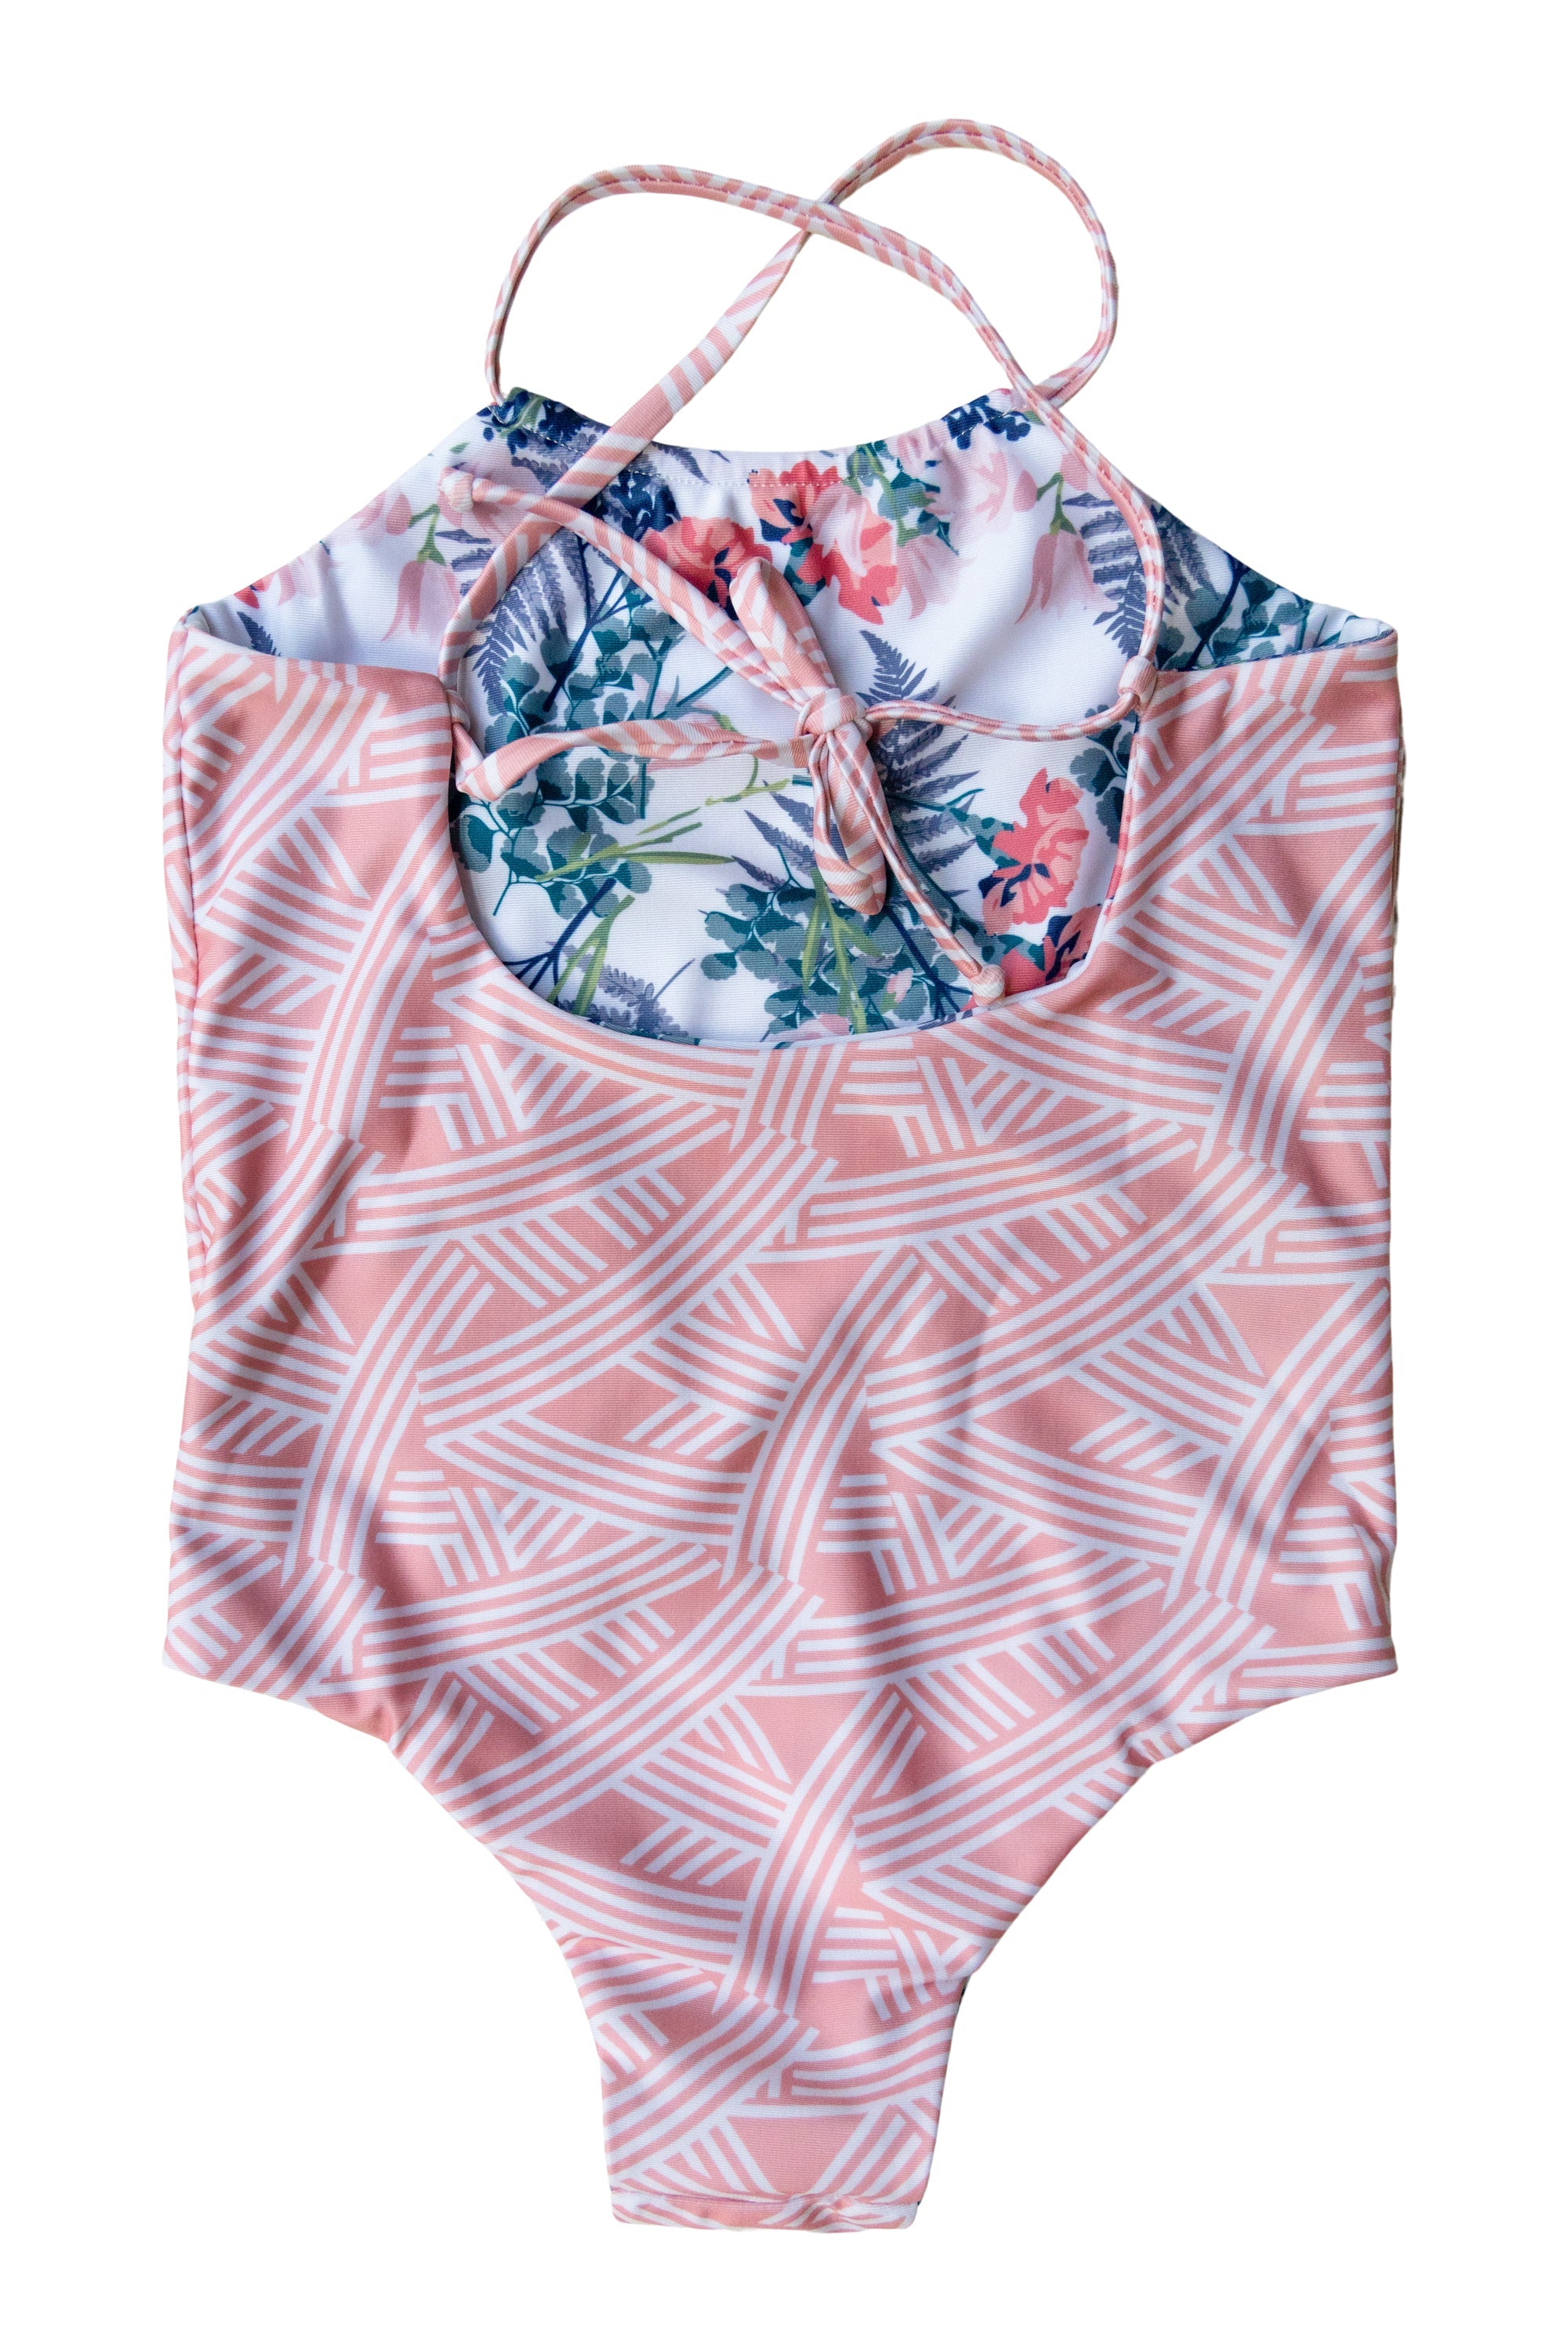 Samui Girls' Swimsuit - Reversible - Garden / Seafoam Rose